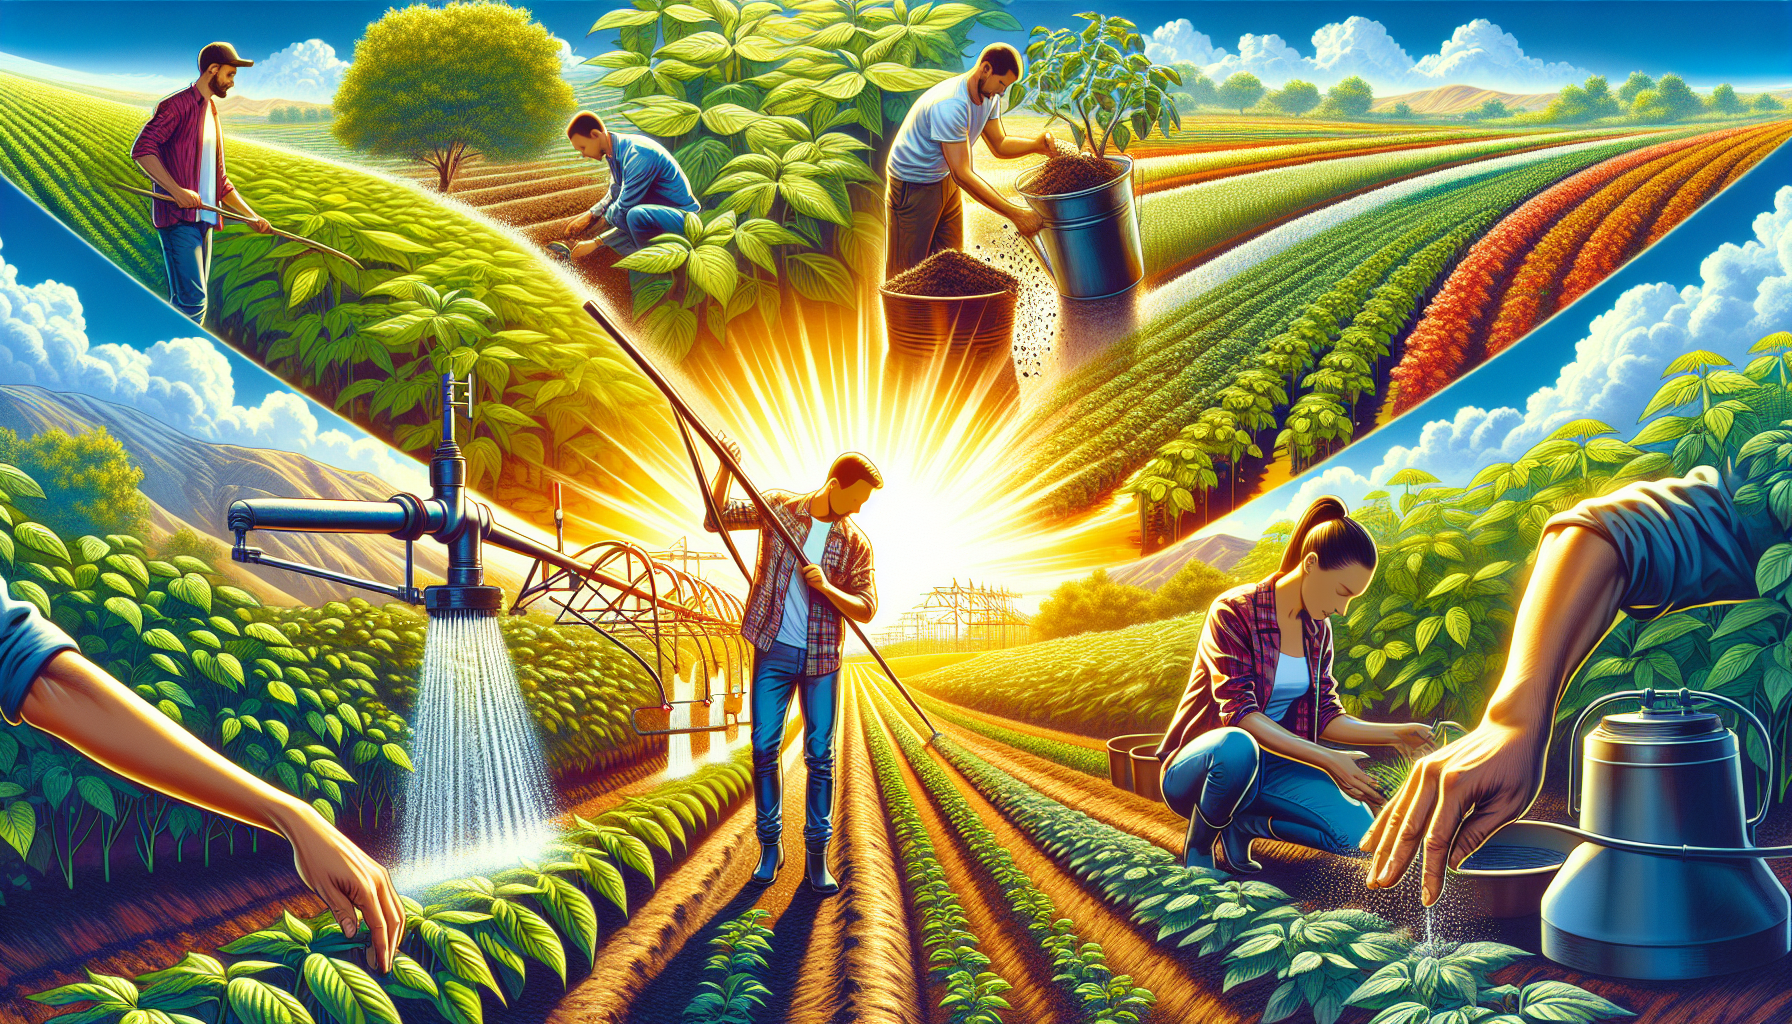 Illustration of agronomic management practices for alleviating plant stress